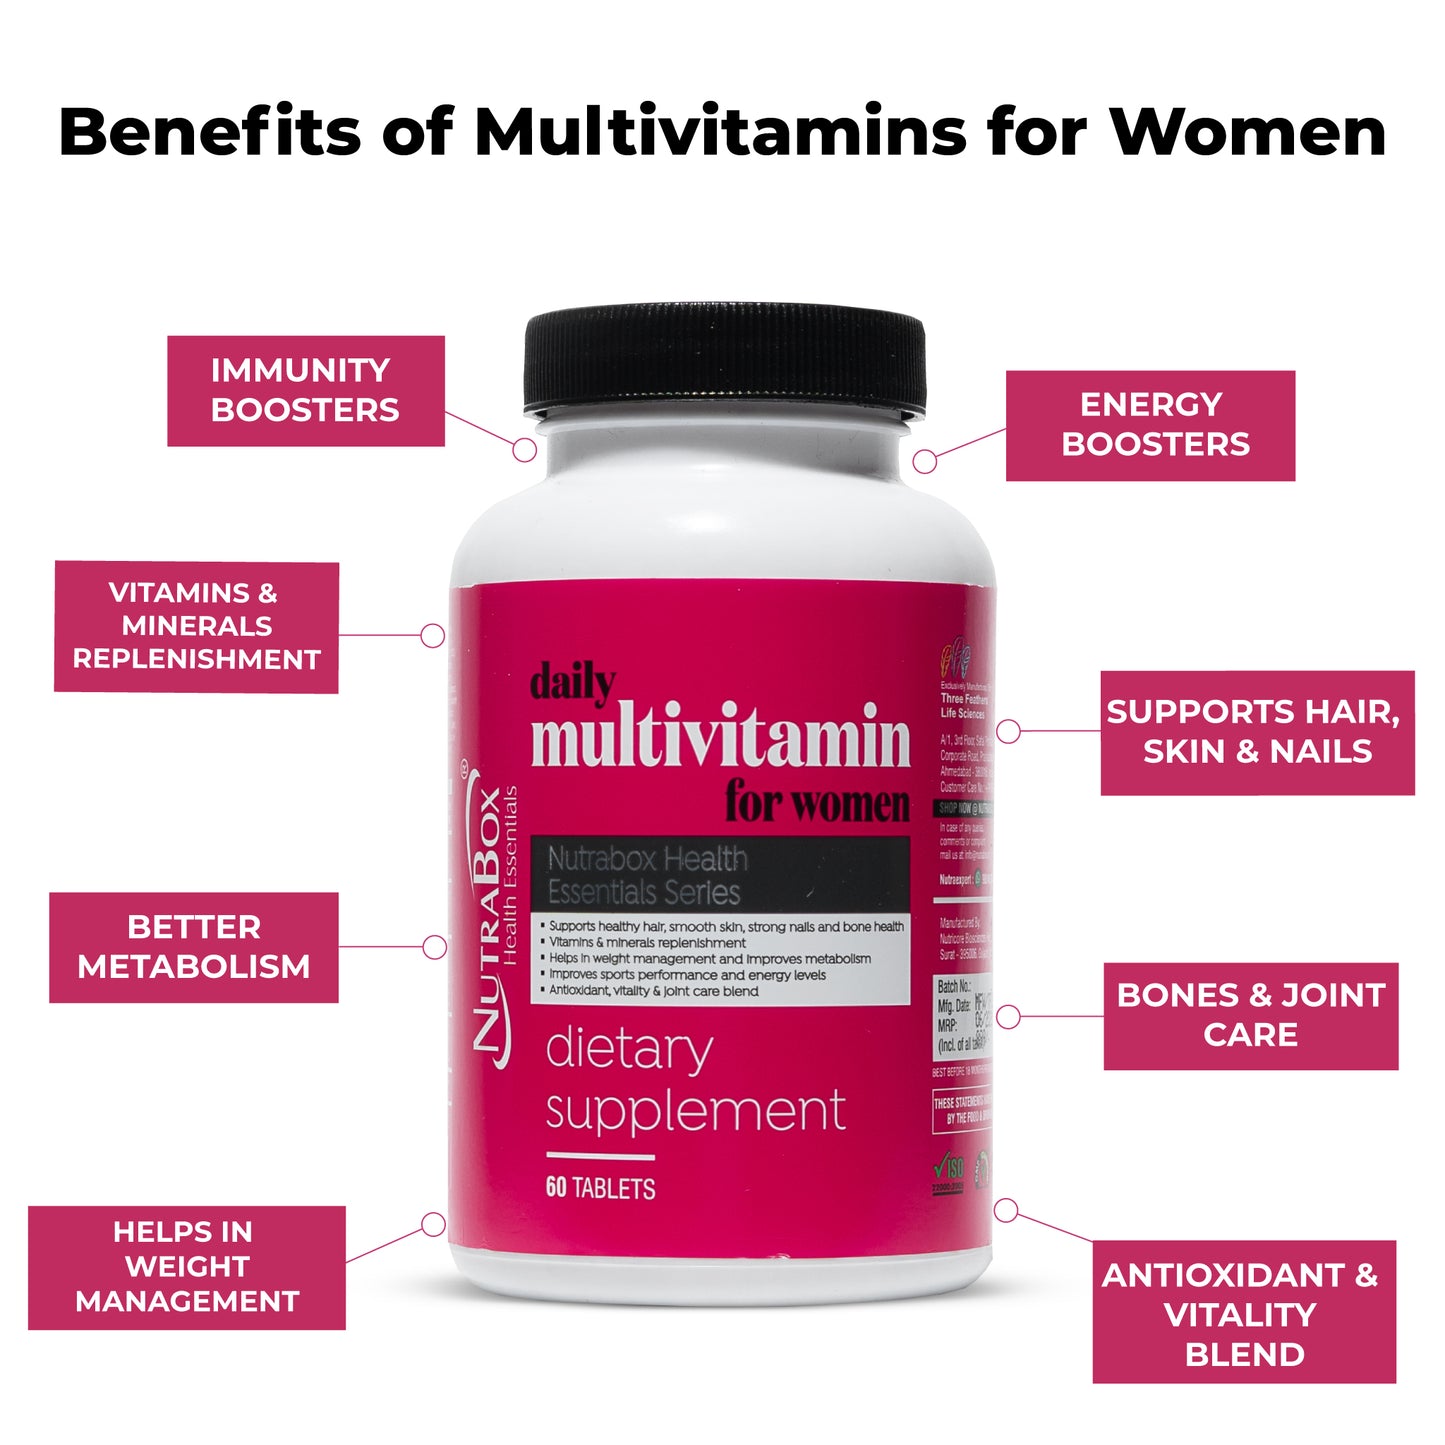 Multivitamin Tablets for Women - Nutrabox India